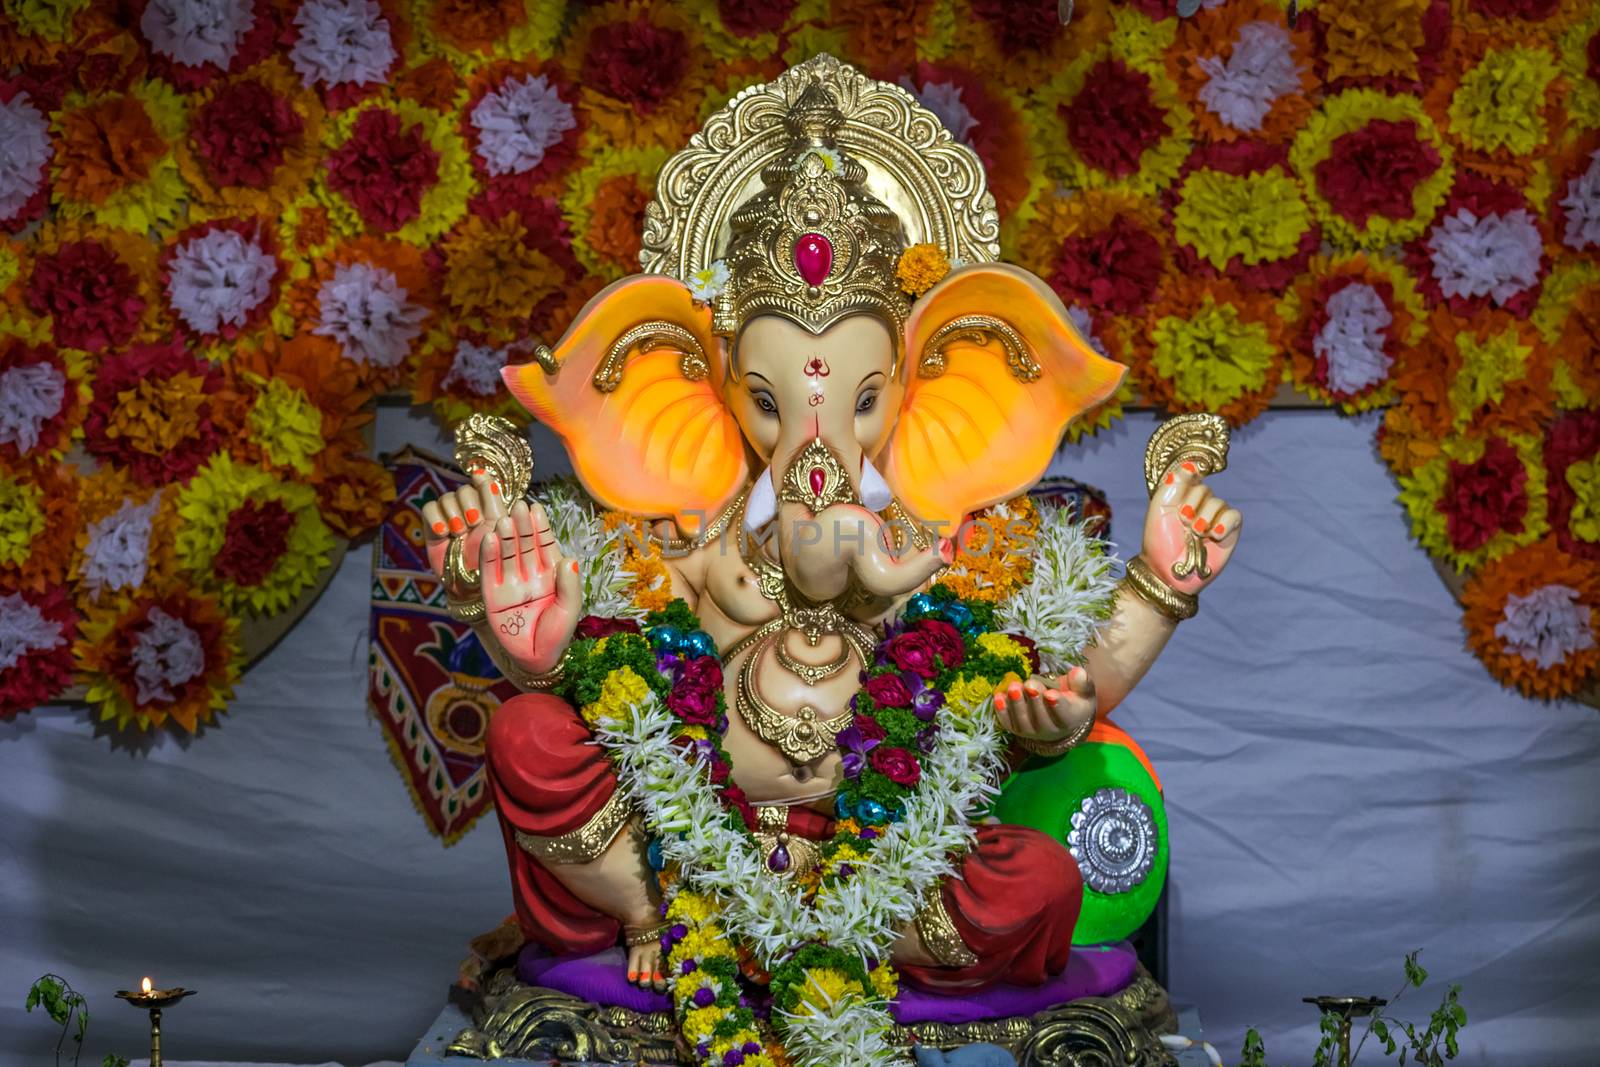 Decorated and garlanded  idol of Hindu God Ganesha in Pune ,Maharashtra, India. by lalam